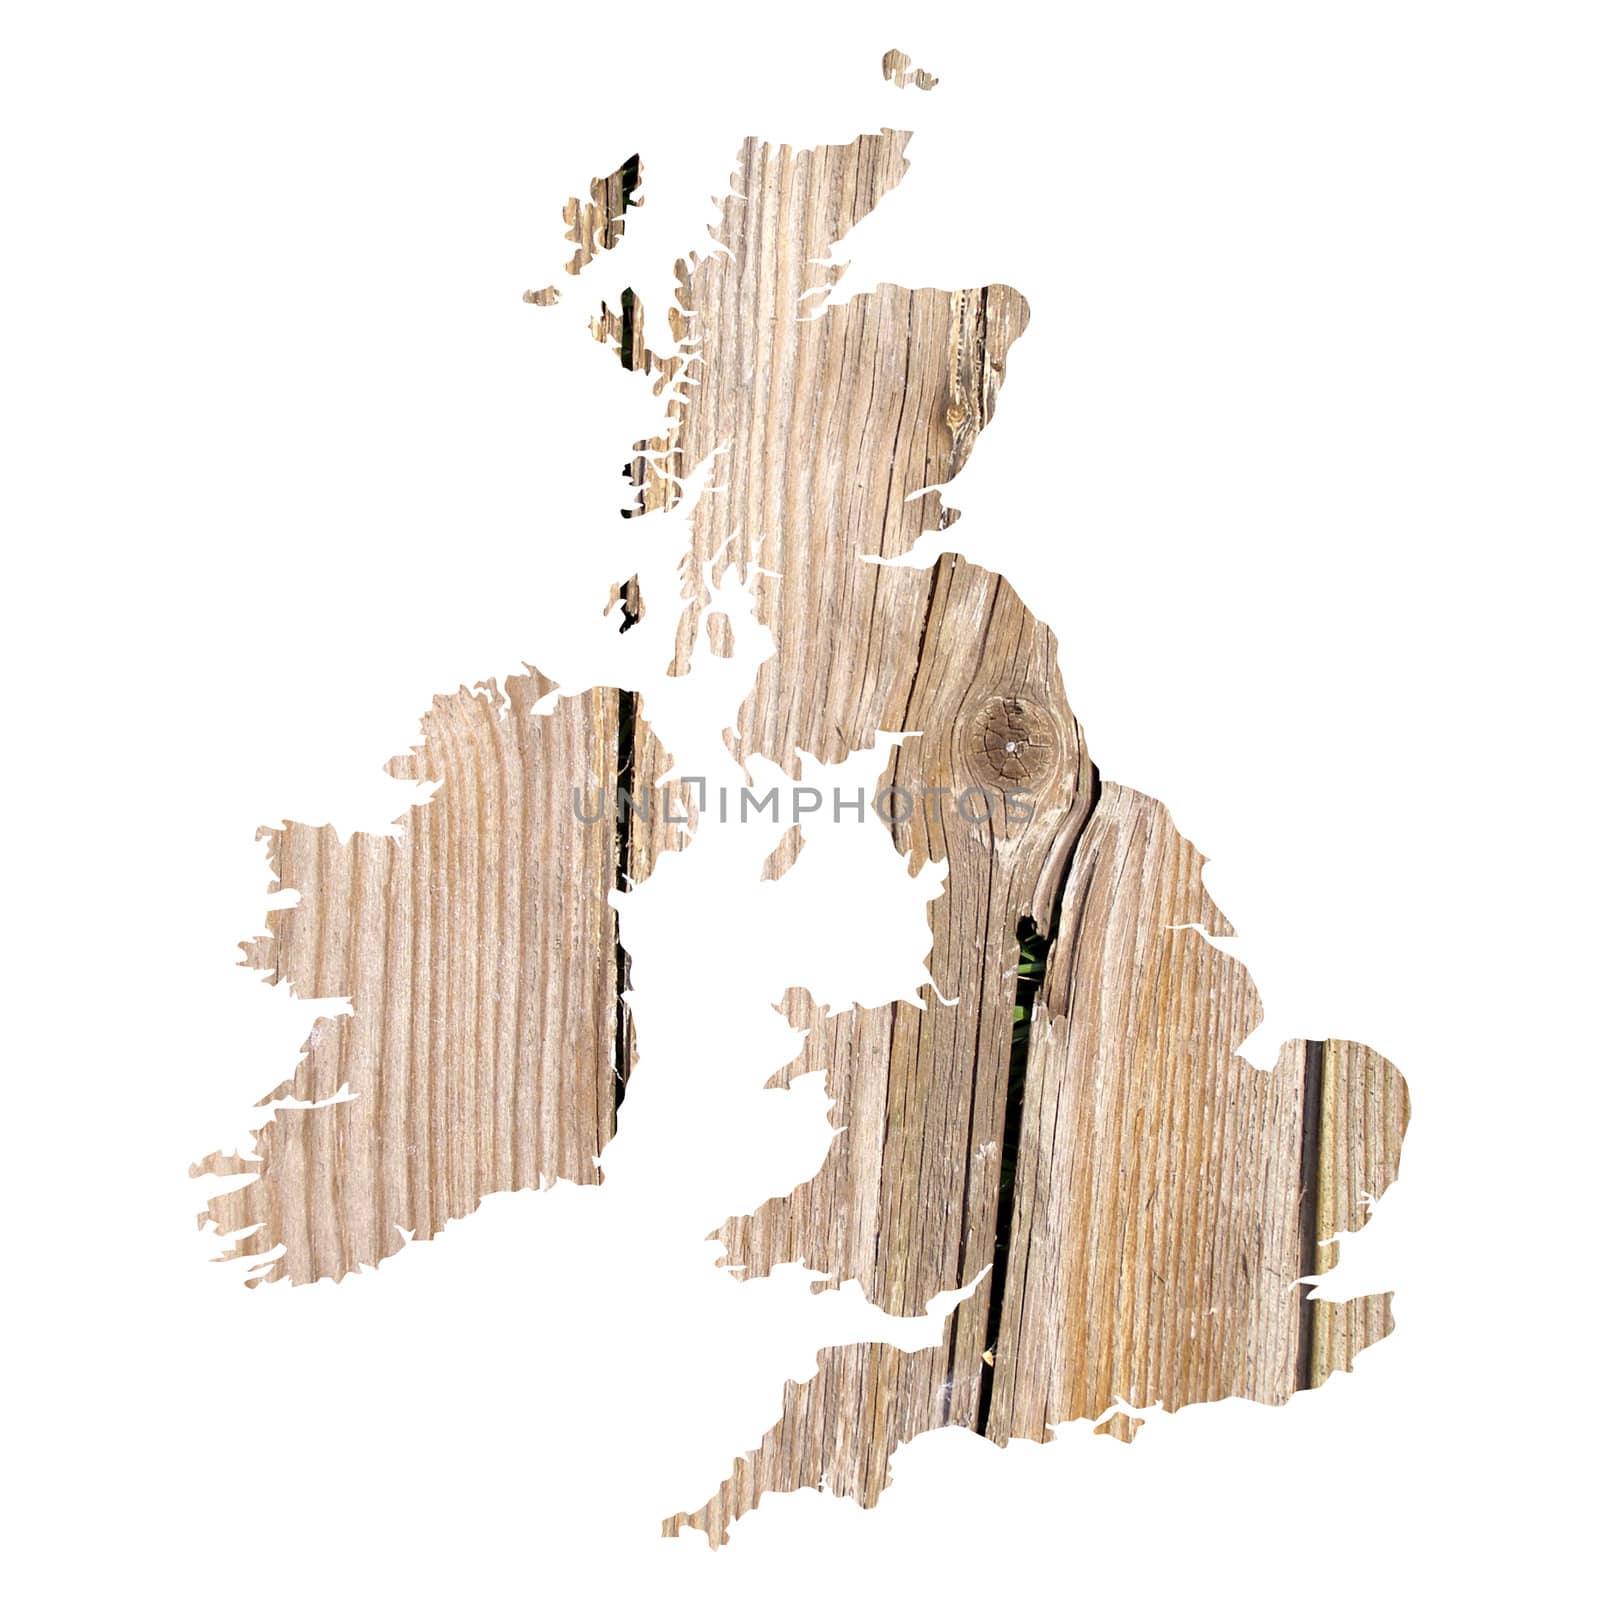 UK and Ireland map with wood background